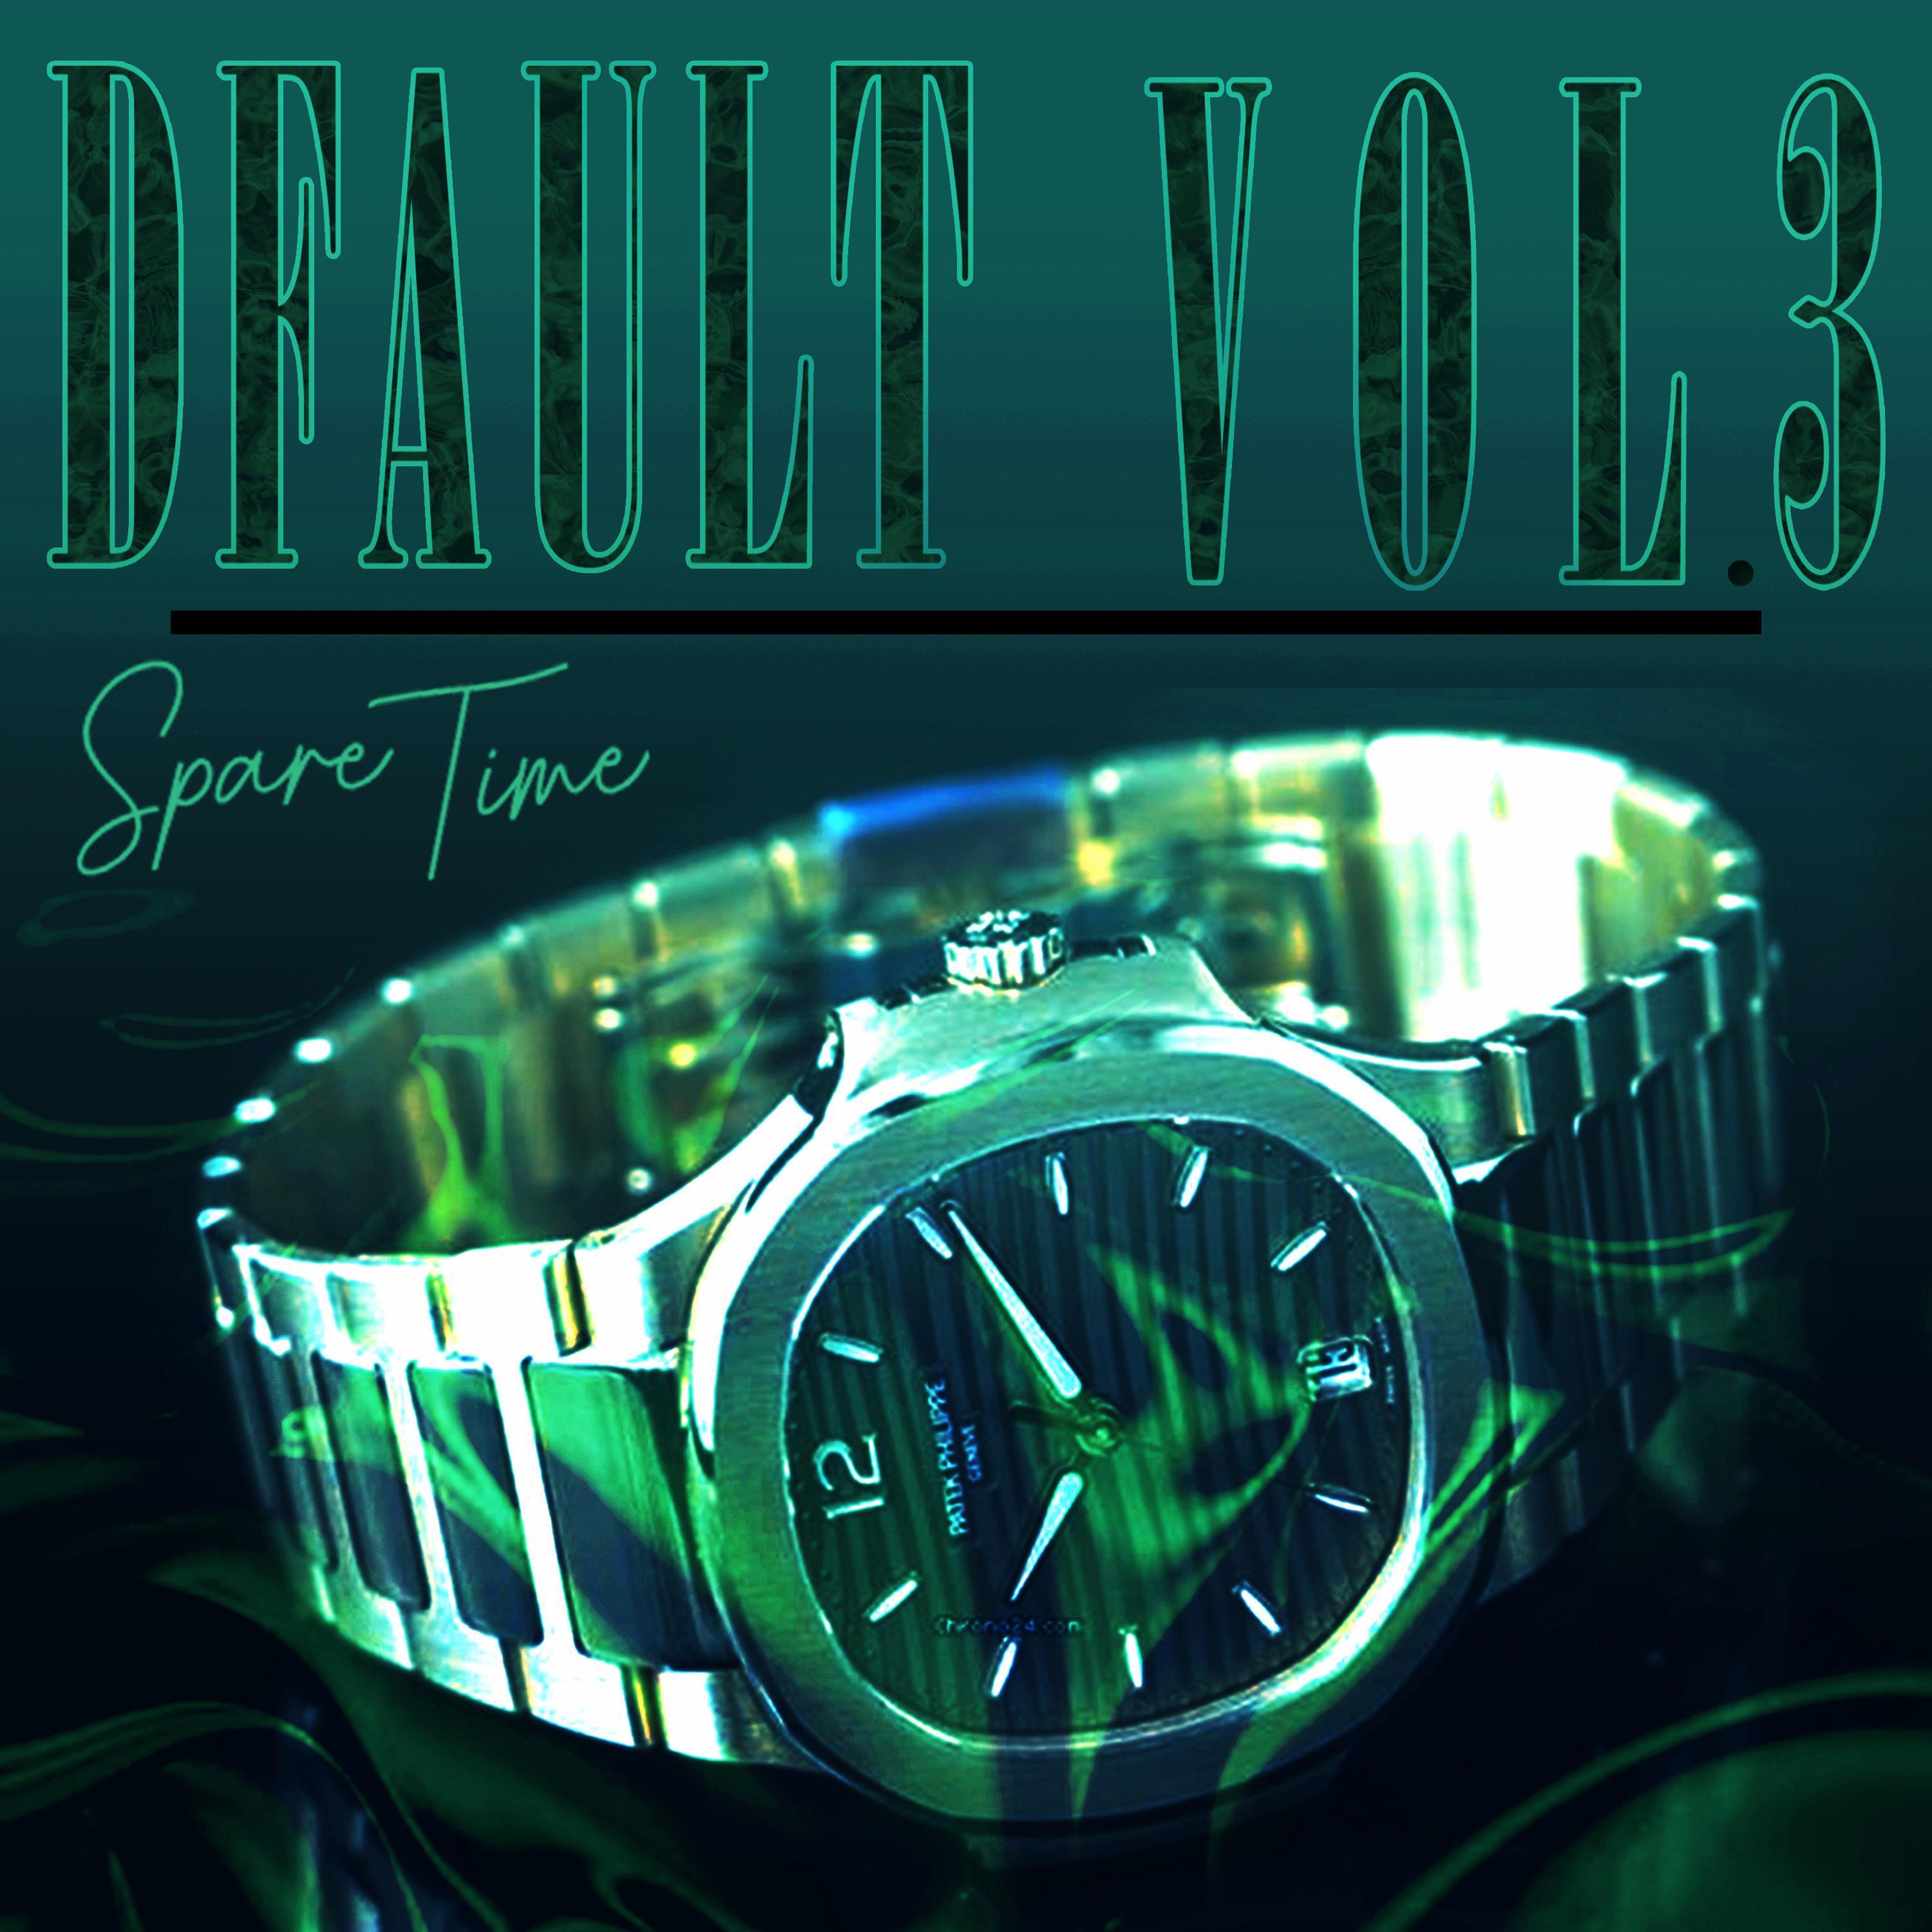 dfaultx - Deal (feat. Woppo)